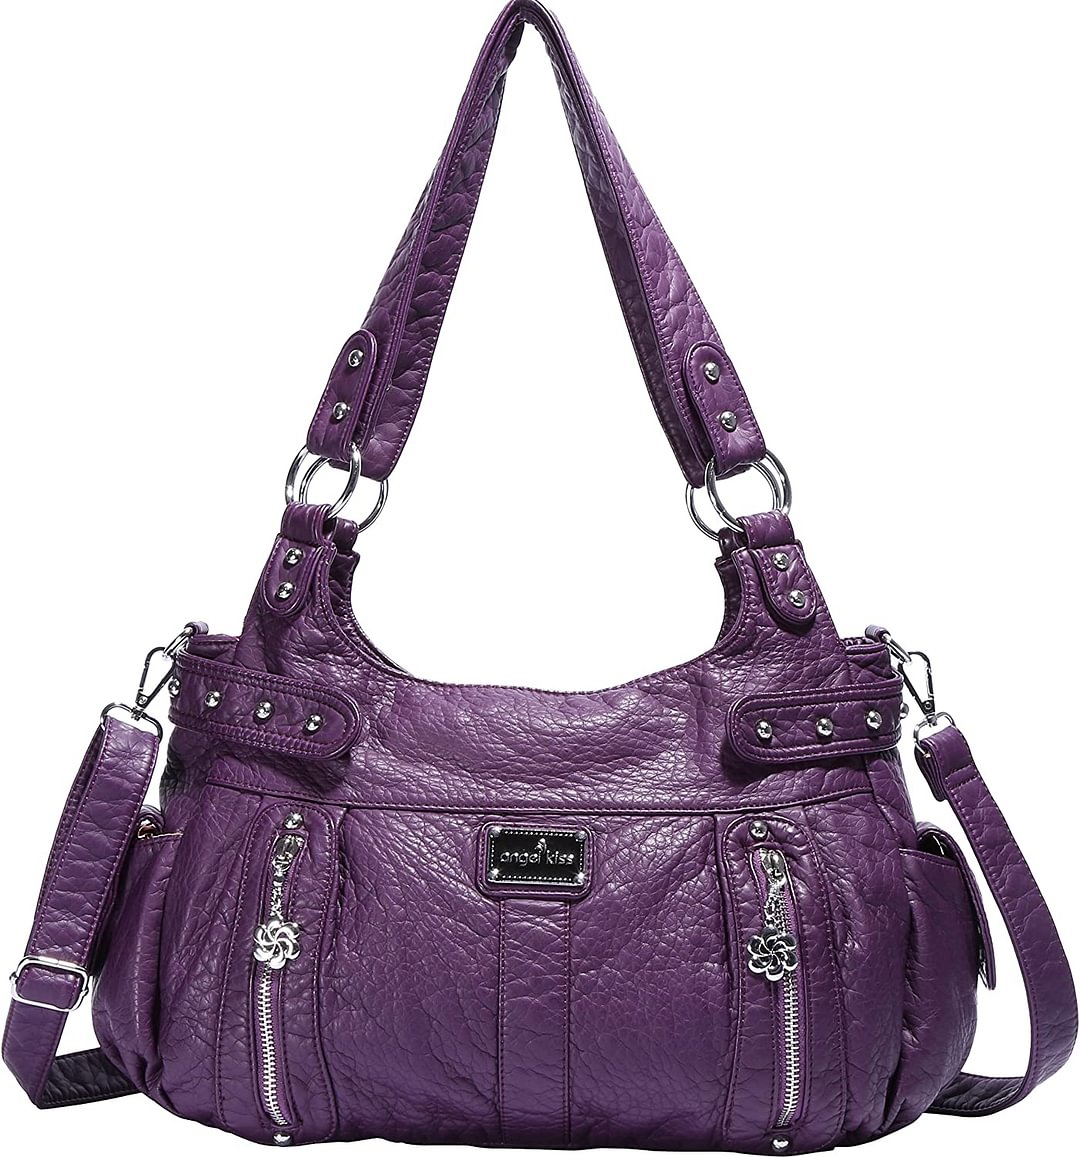 Design Handbags Womens Purse Feel Soft Lether Multiple Top Zipper Pockets Shoulder Bags Large